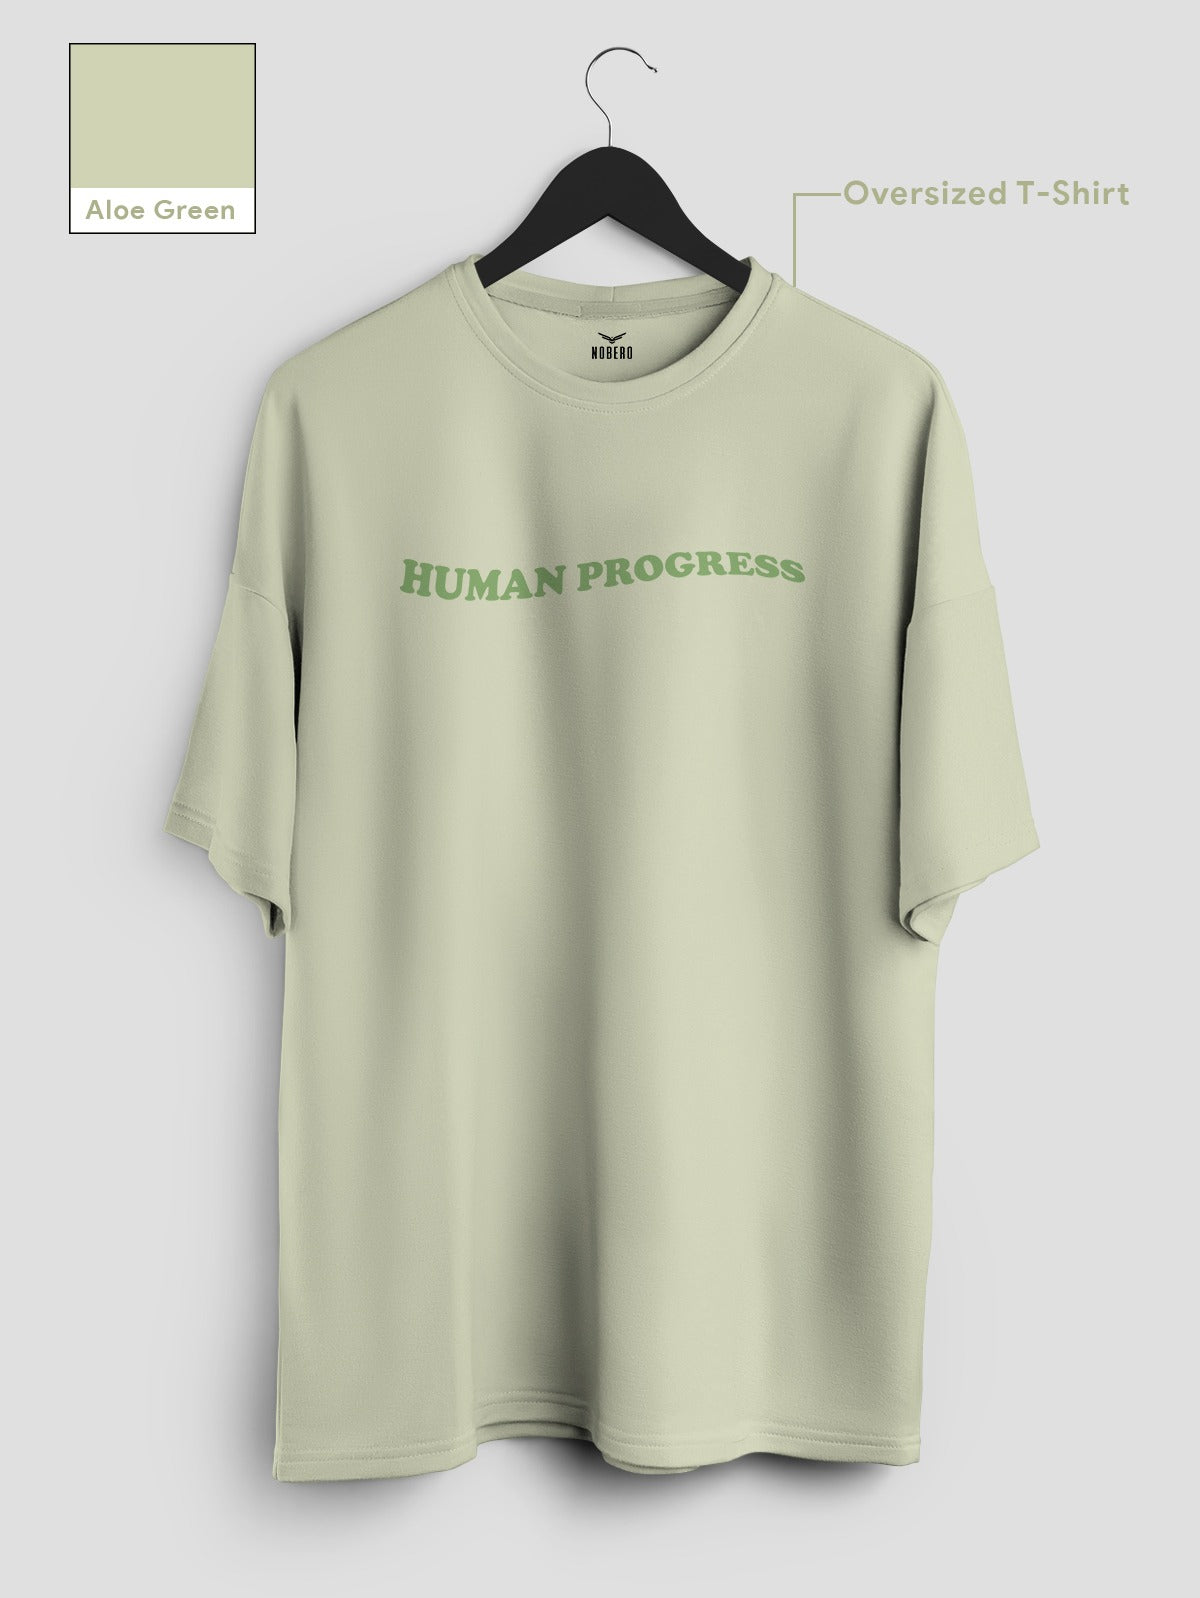 Human Progress Oversized T-Shirt